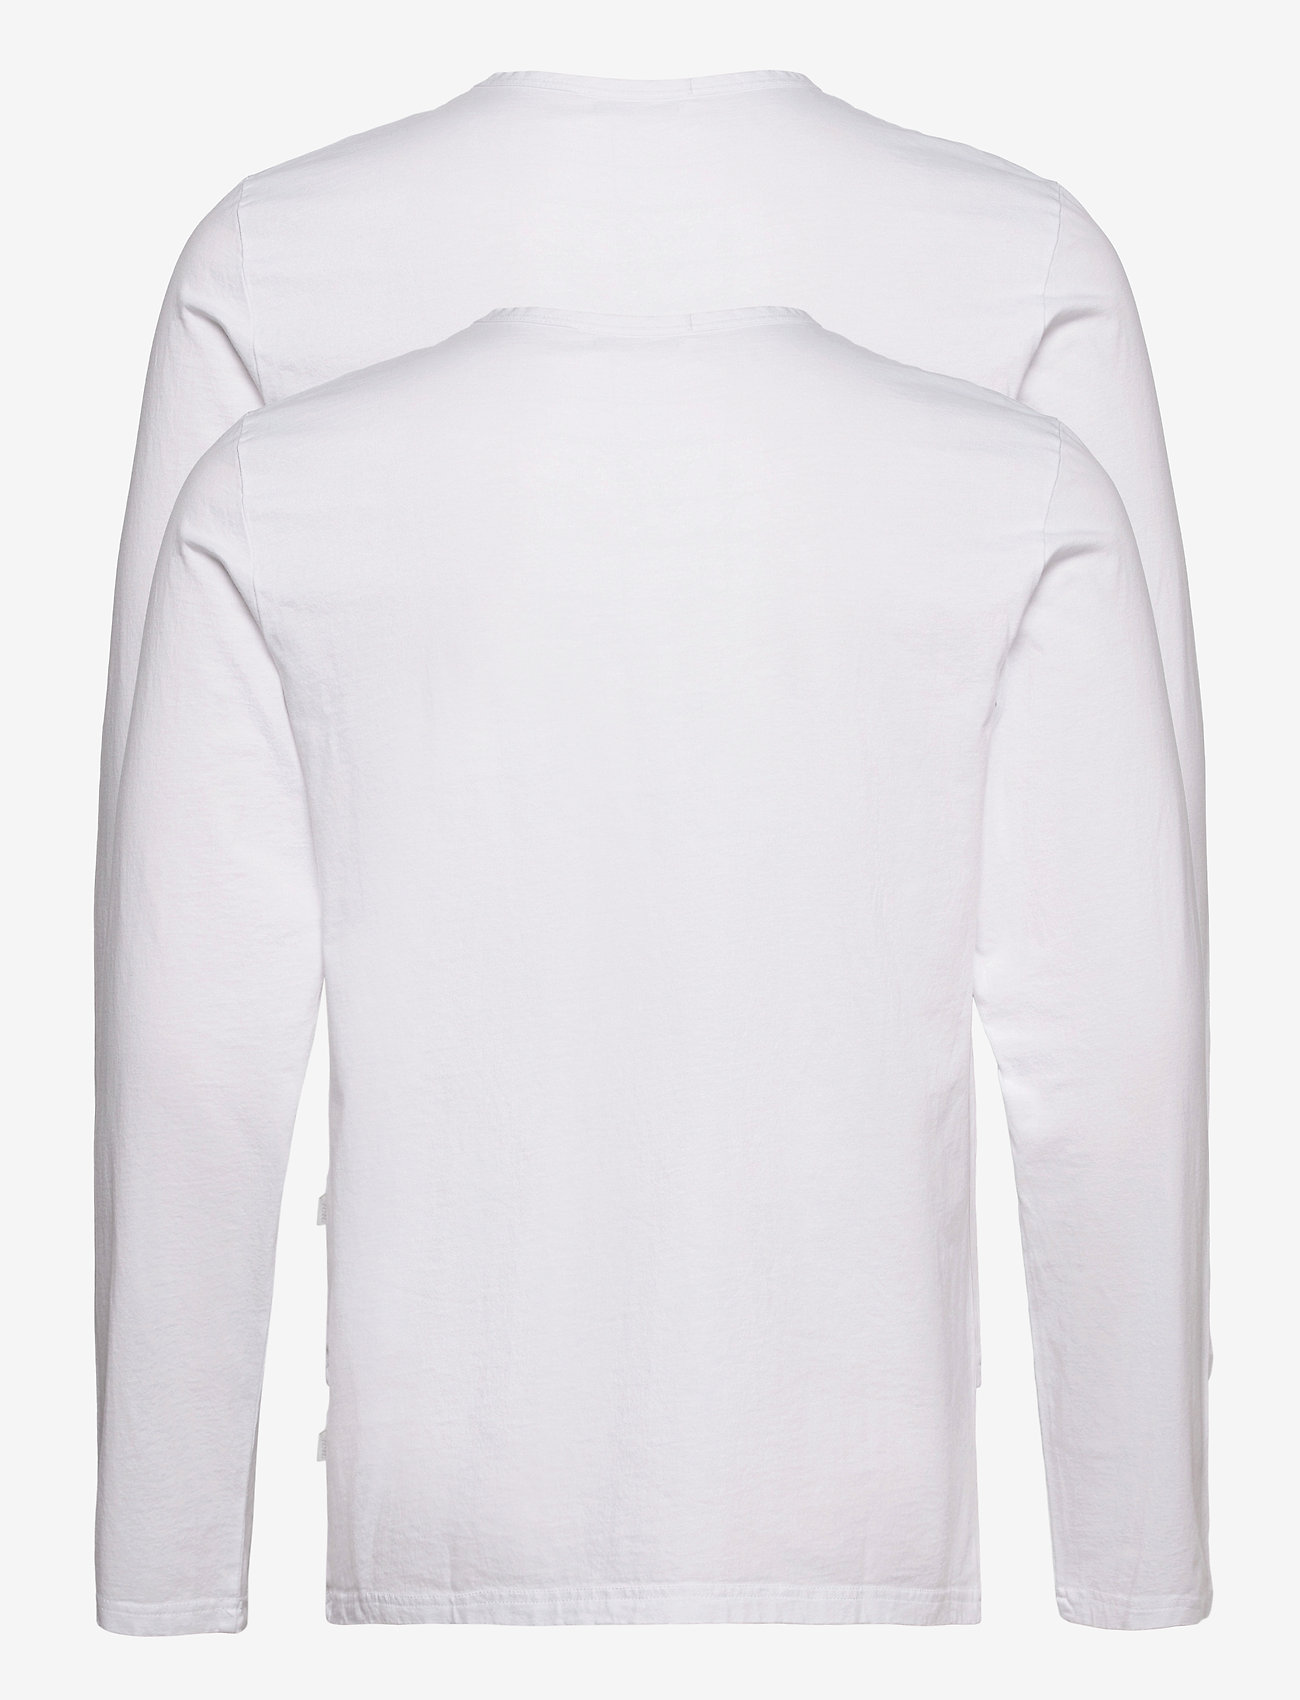 Wood Wood - Emil 2-pack long sleeve - basis-t-skjorter - bright white - 1